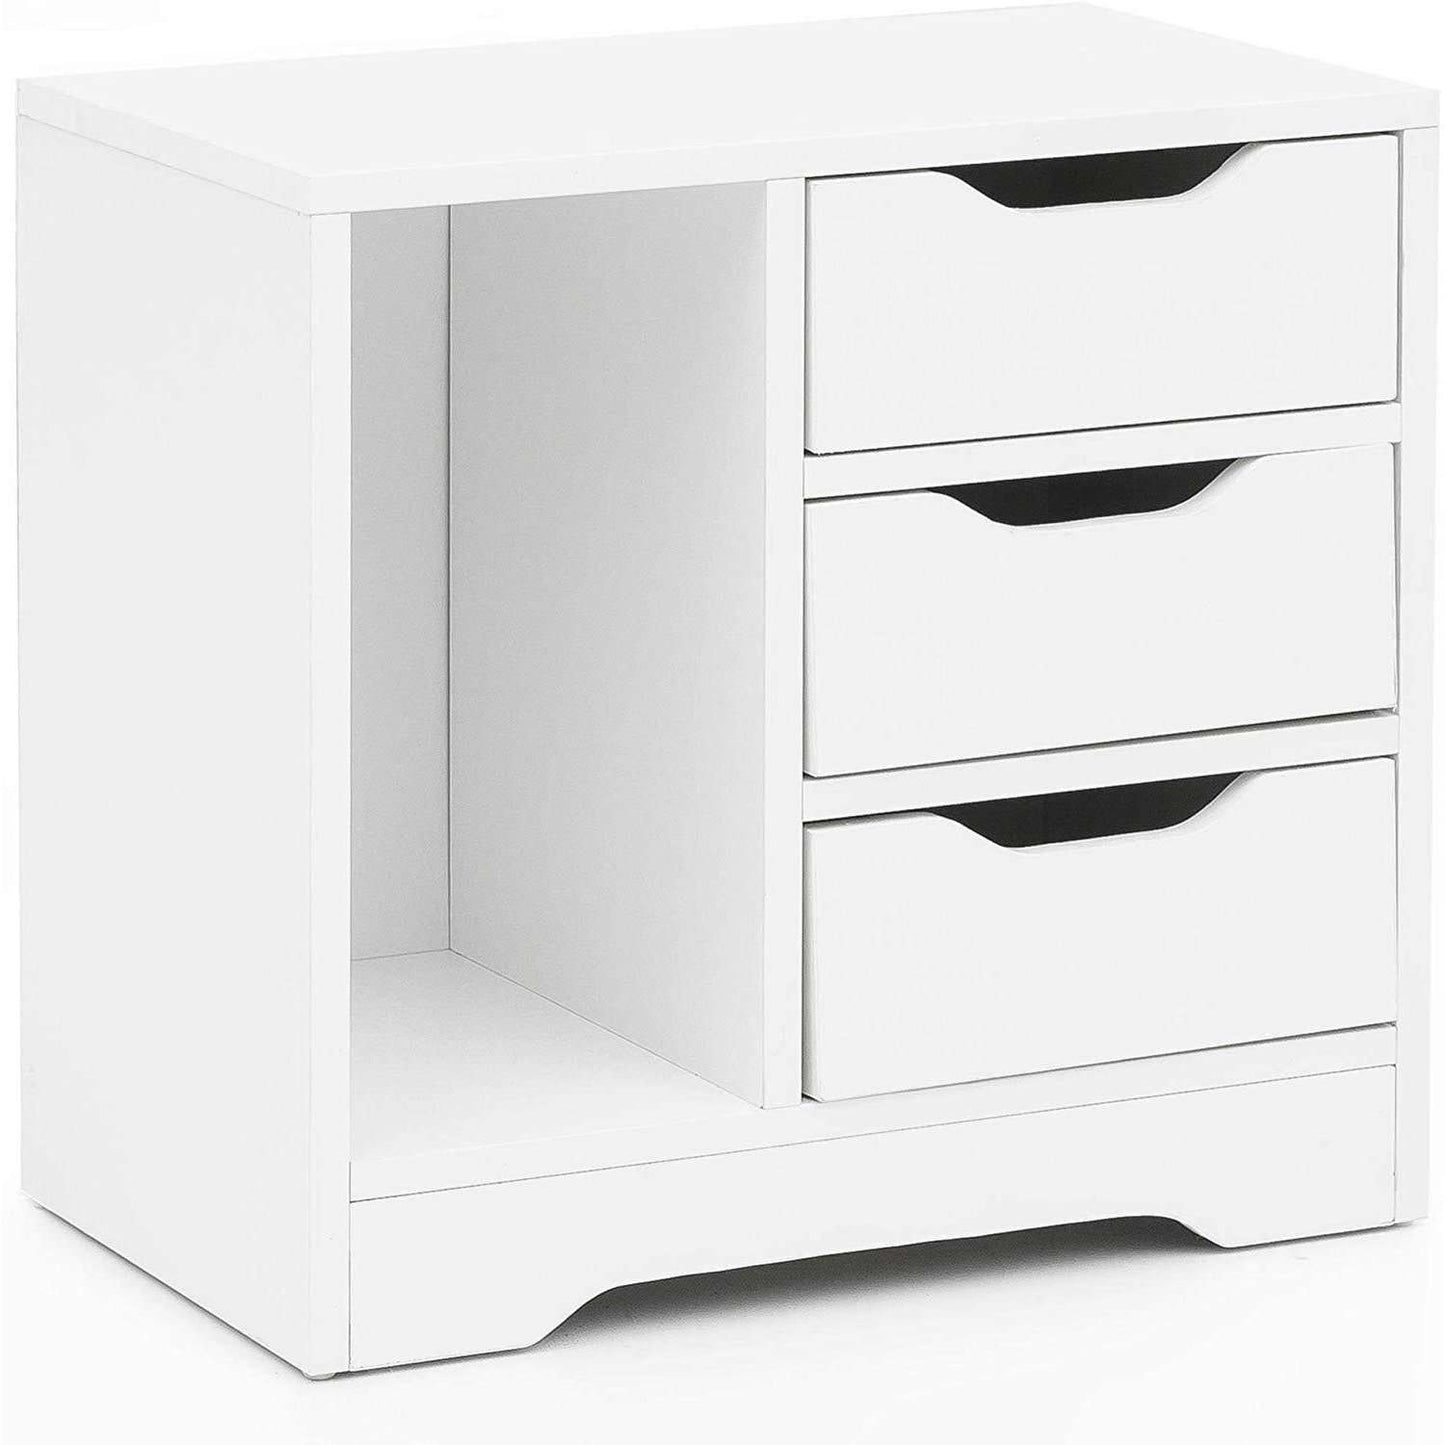 Nancy's Bedside Table - Wooden Cabinet - White -49 x 50 x 30 cm